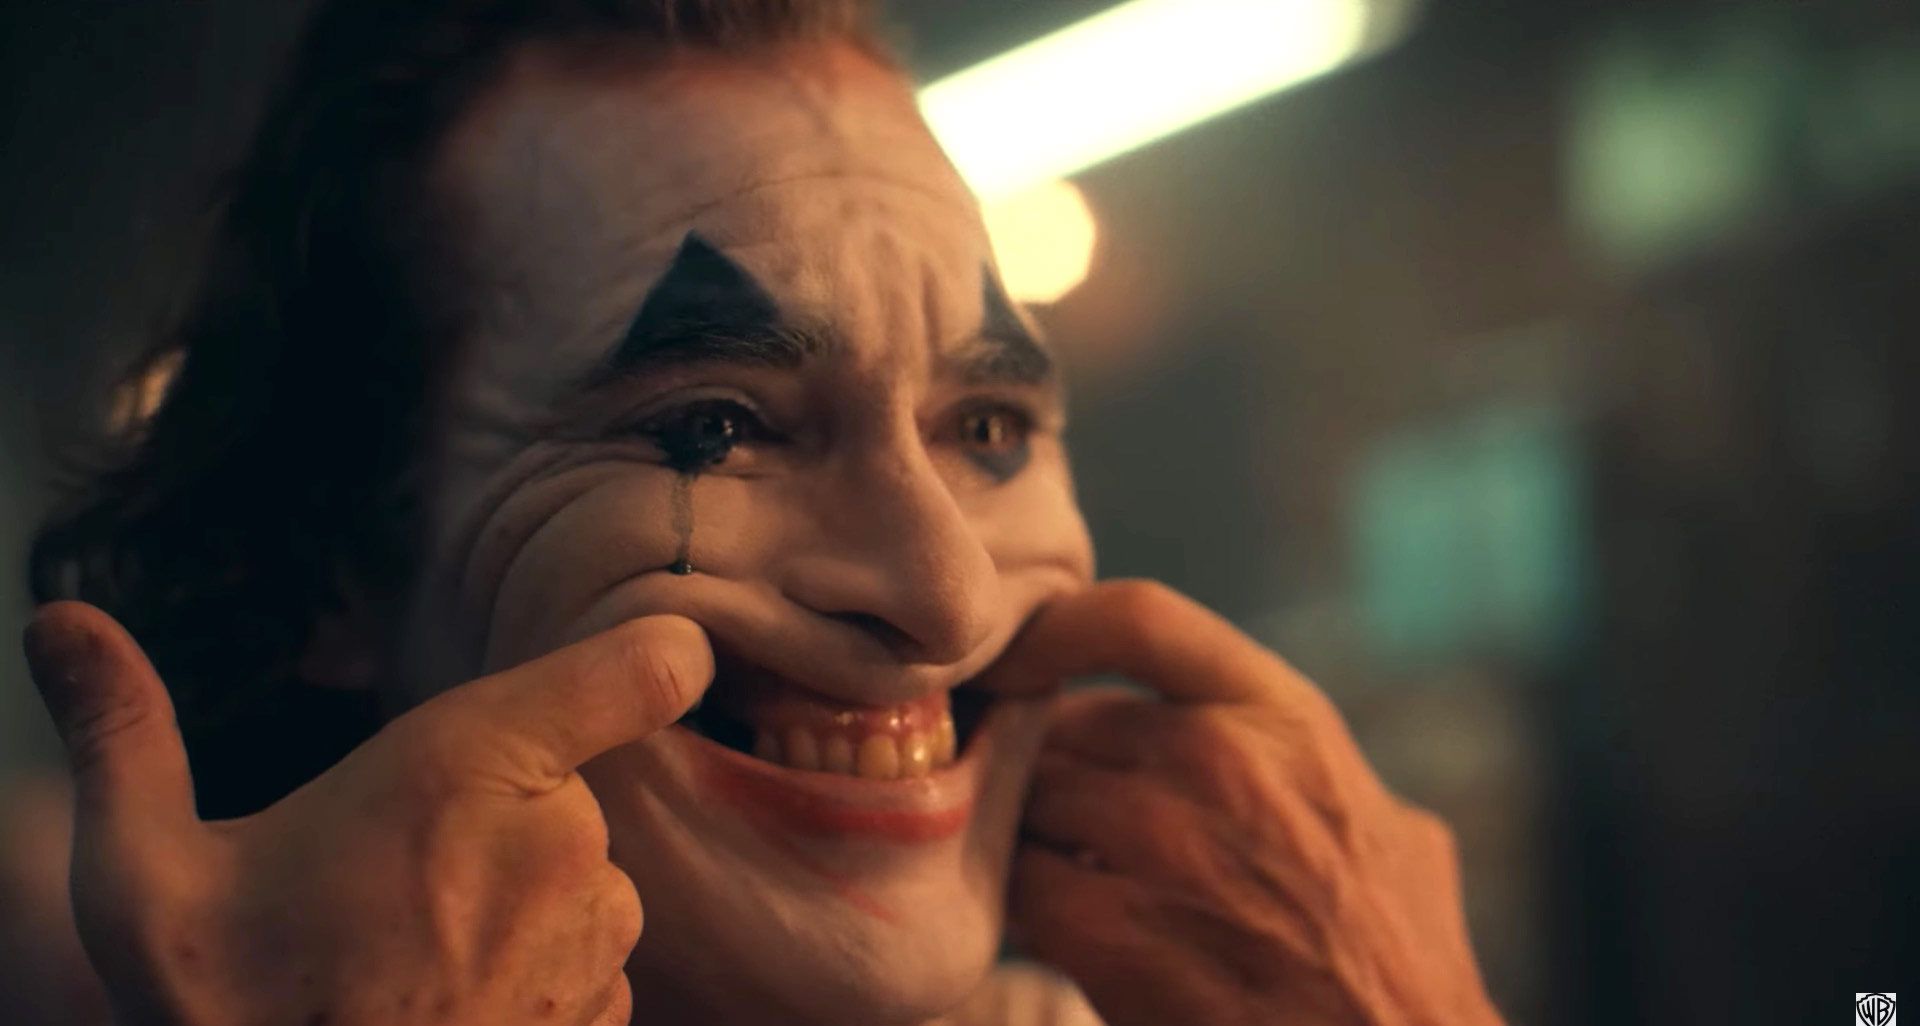 Joker Tracking For $103M Opening Weekend